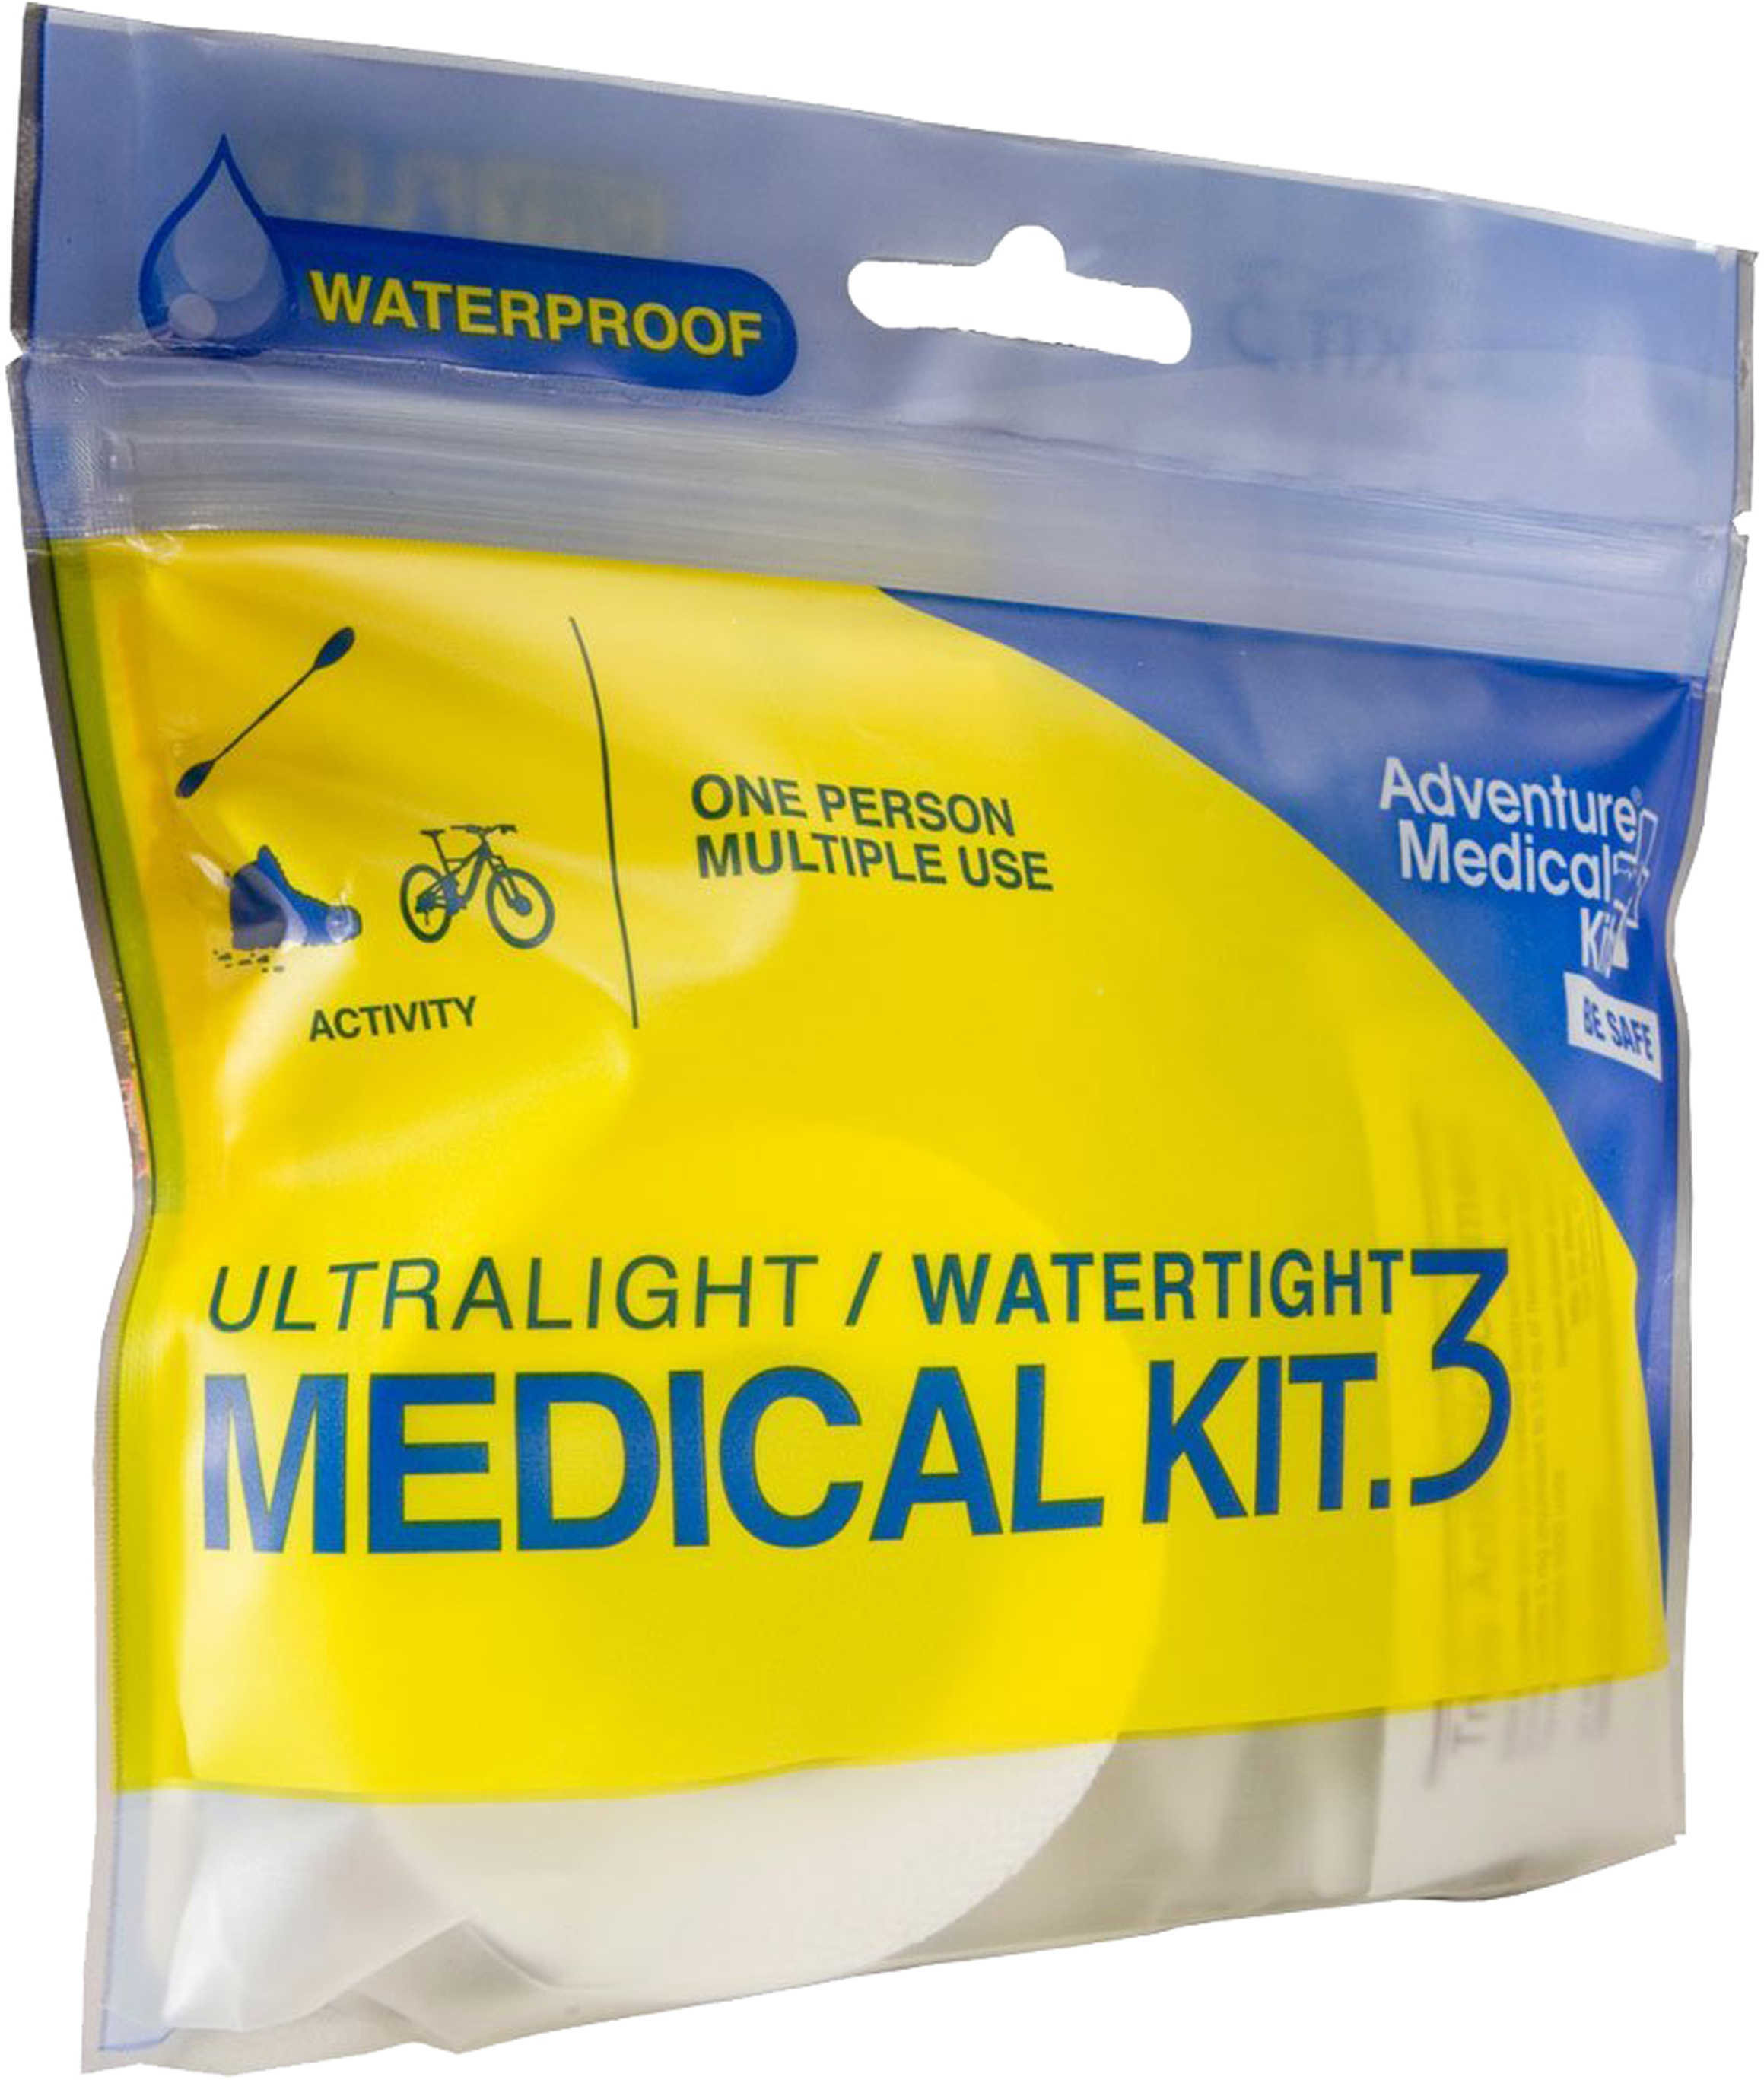 AMK Ultralight/Watertight .3 Medical Kit 1 Person/Multi-Use